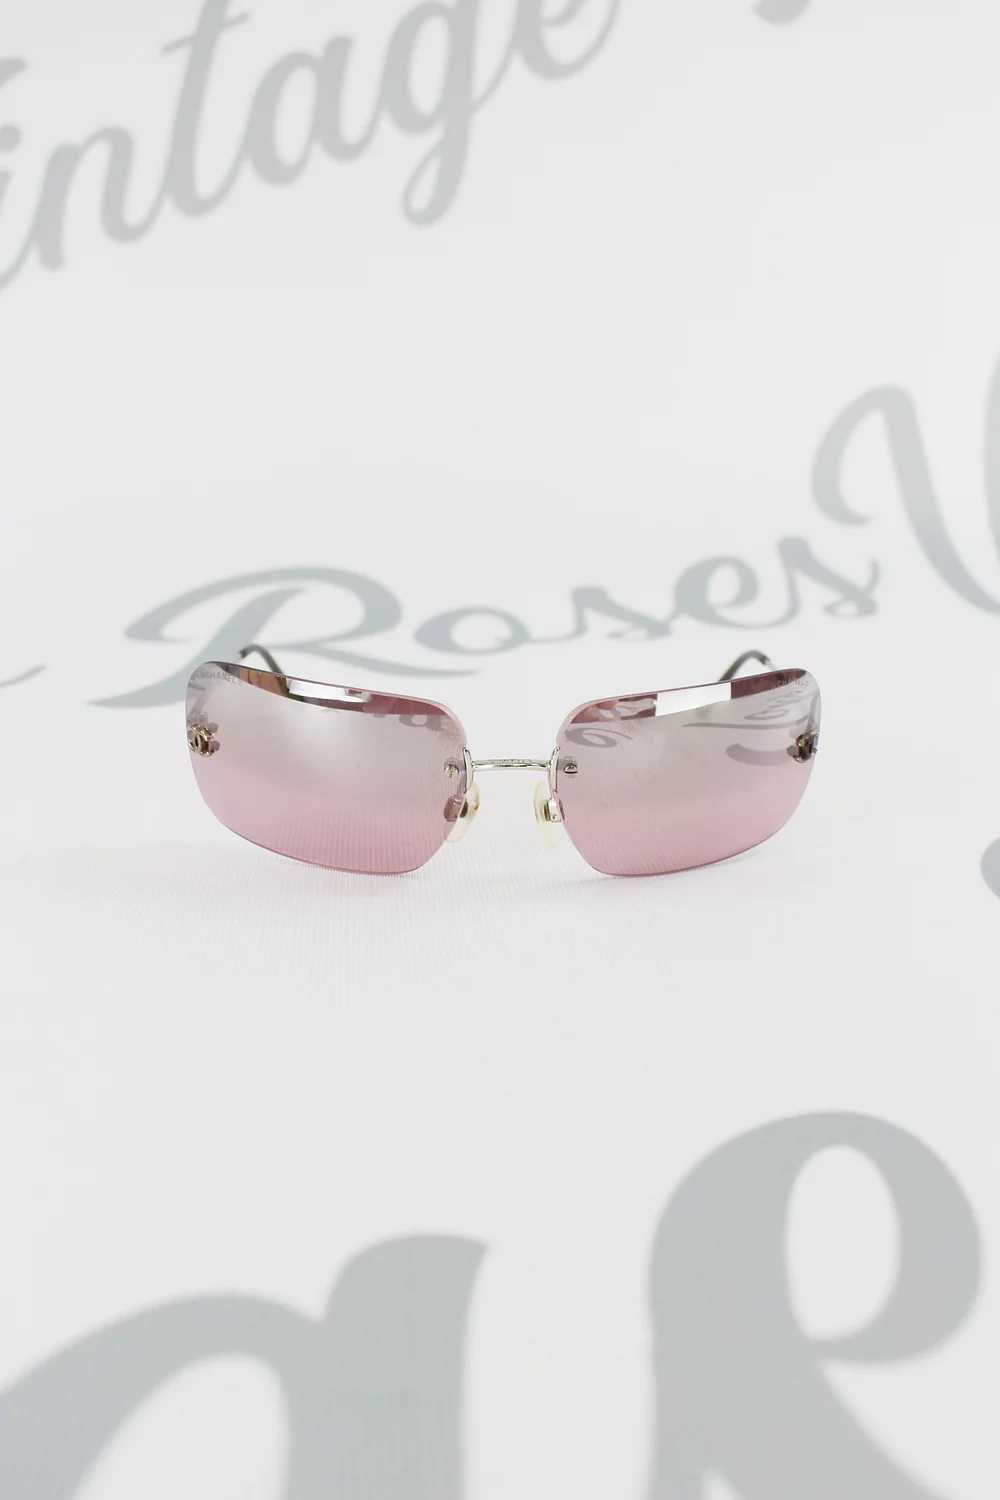 chanel rimless sunglasses pink oversized